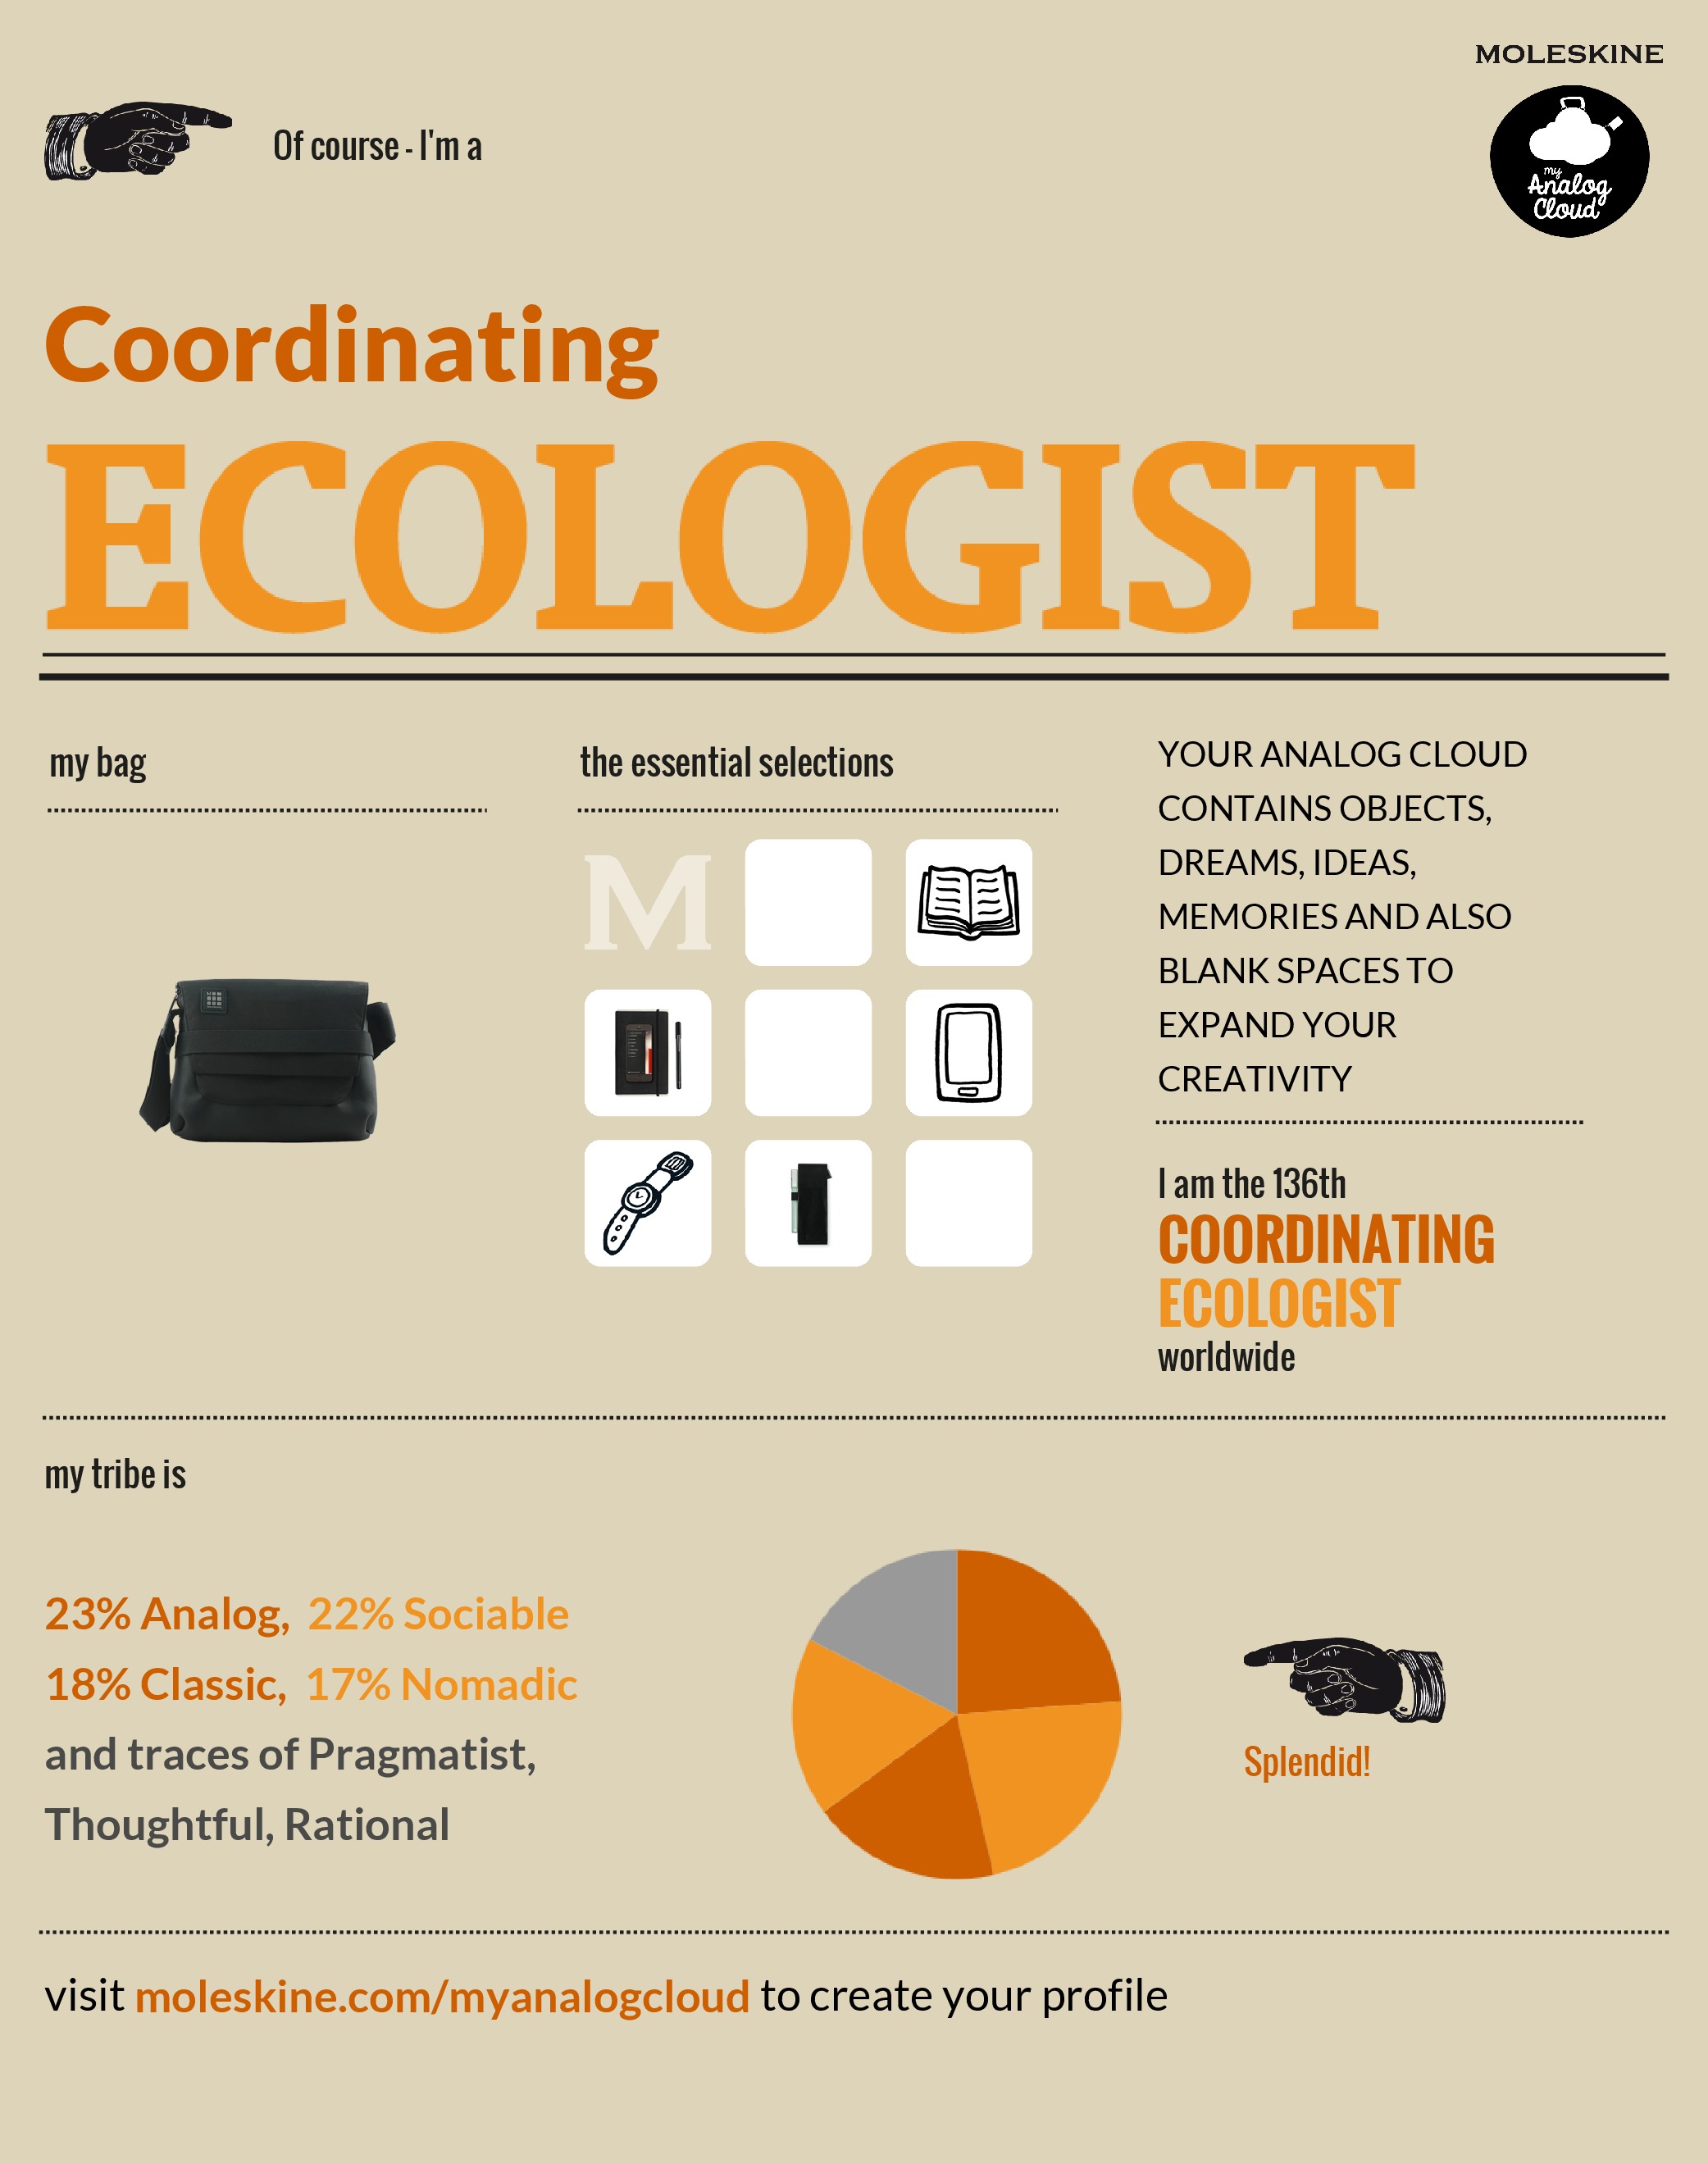 Mon profil Moleskine: Coordinating Ecologist